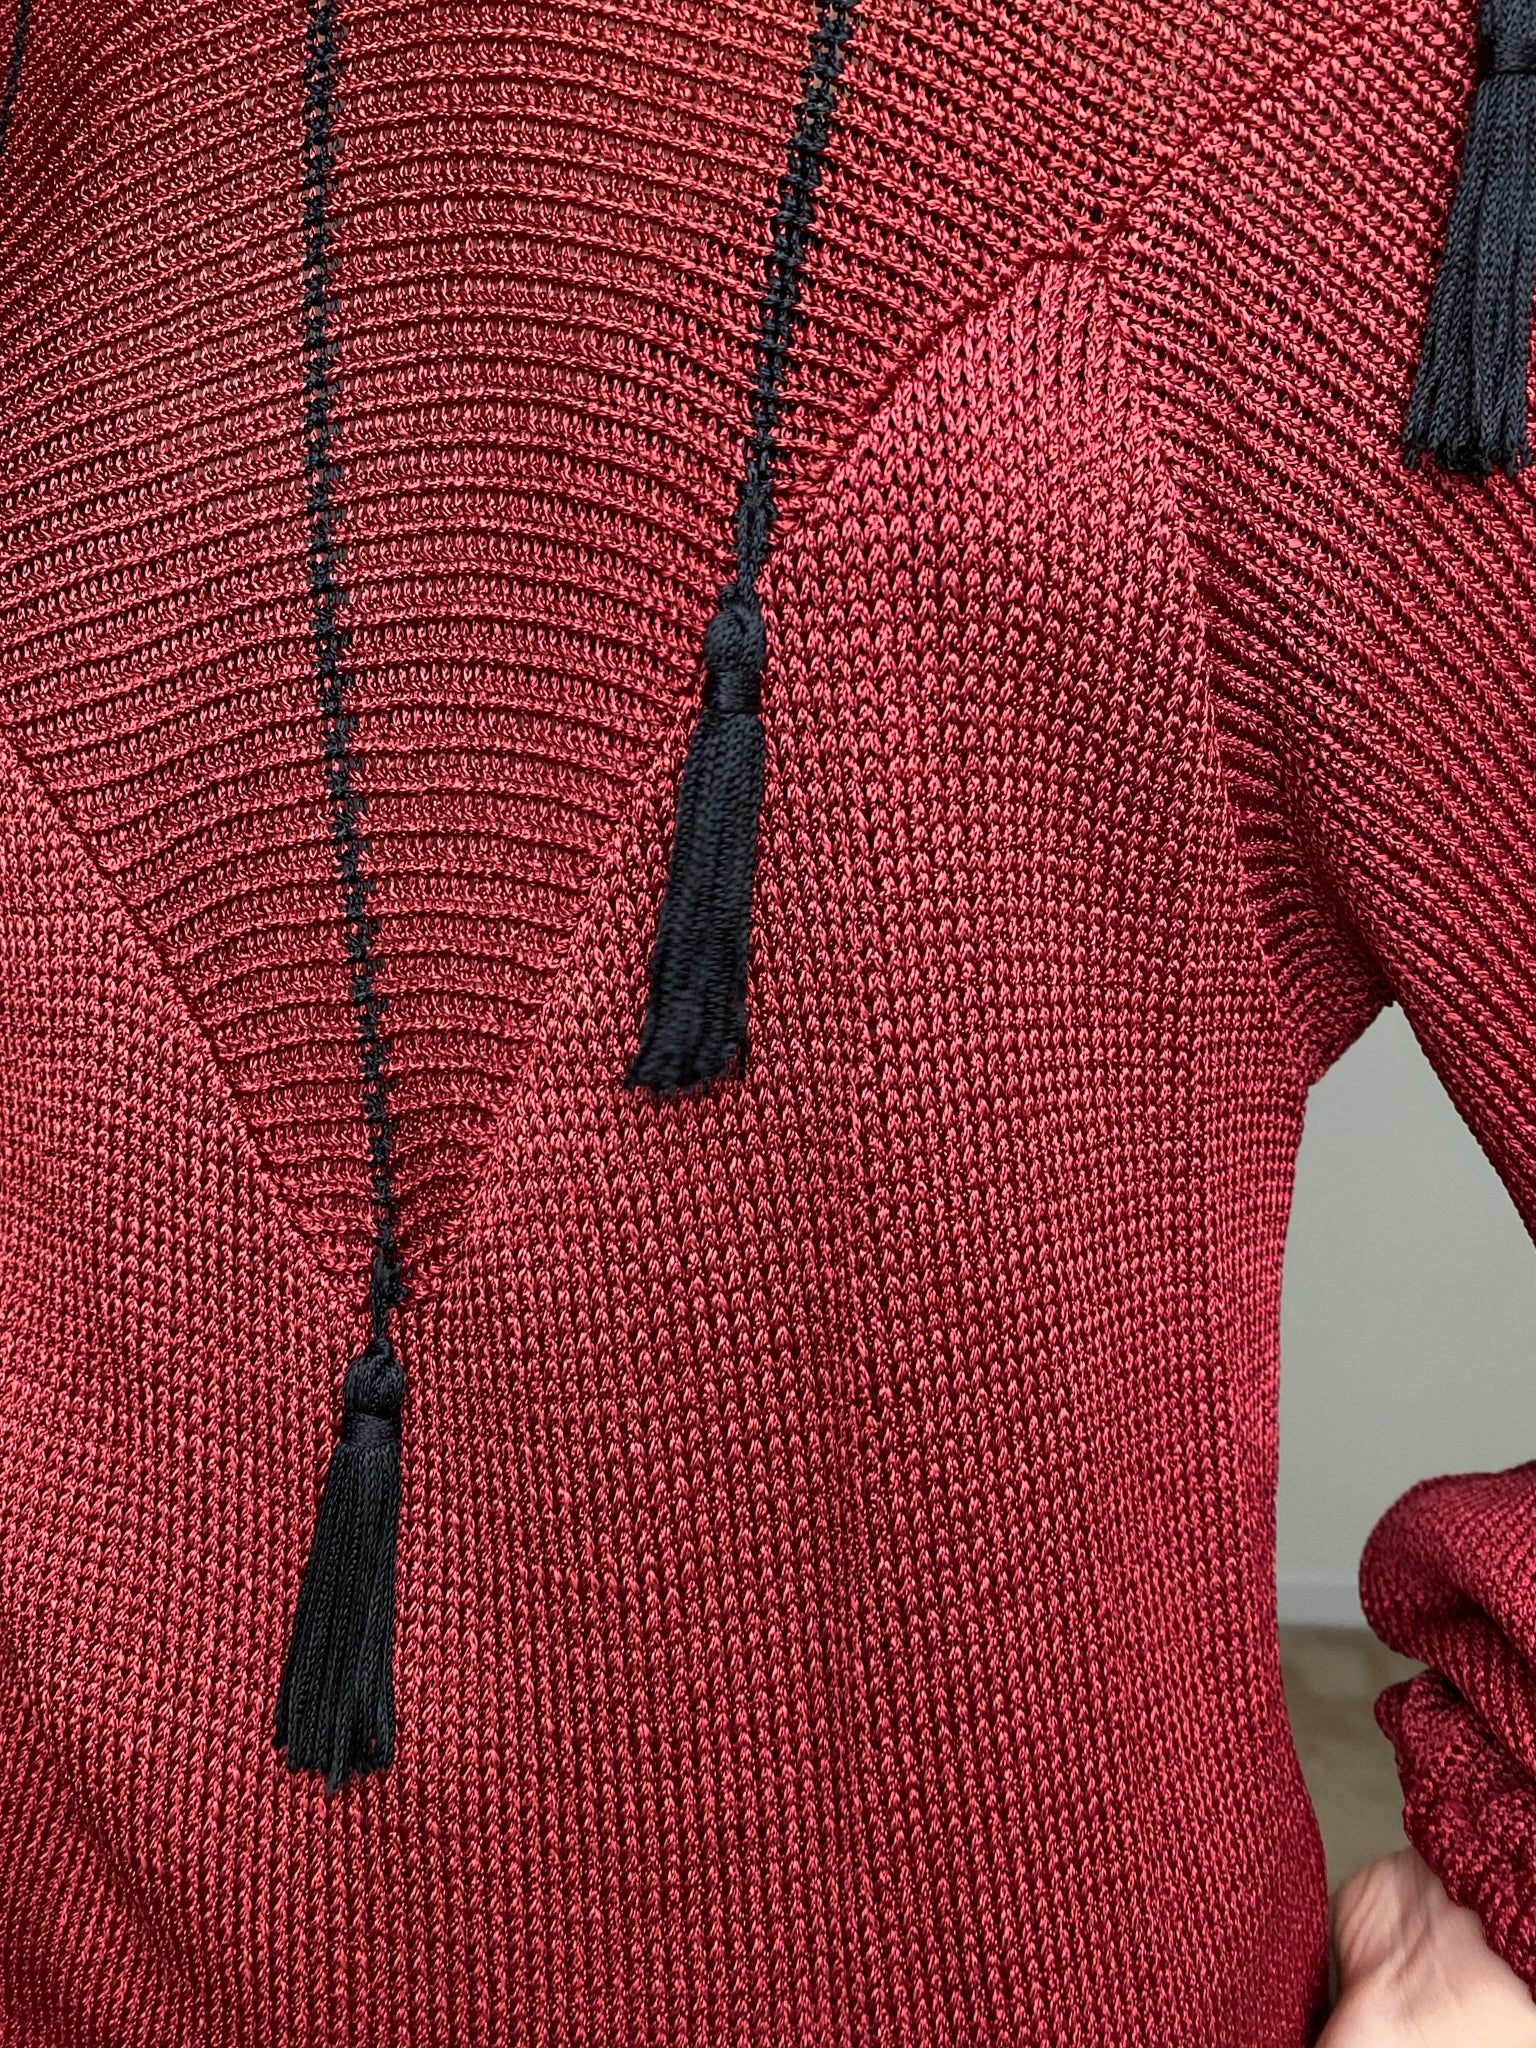 Tassel Tunic Sweater (fits like S)